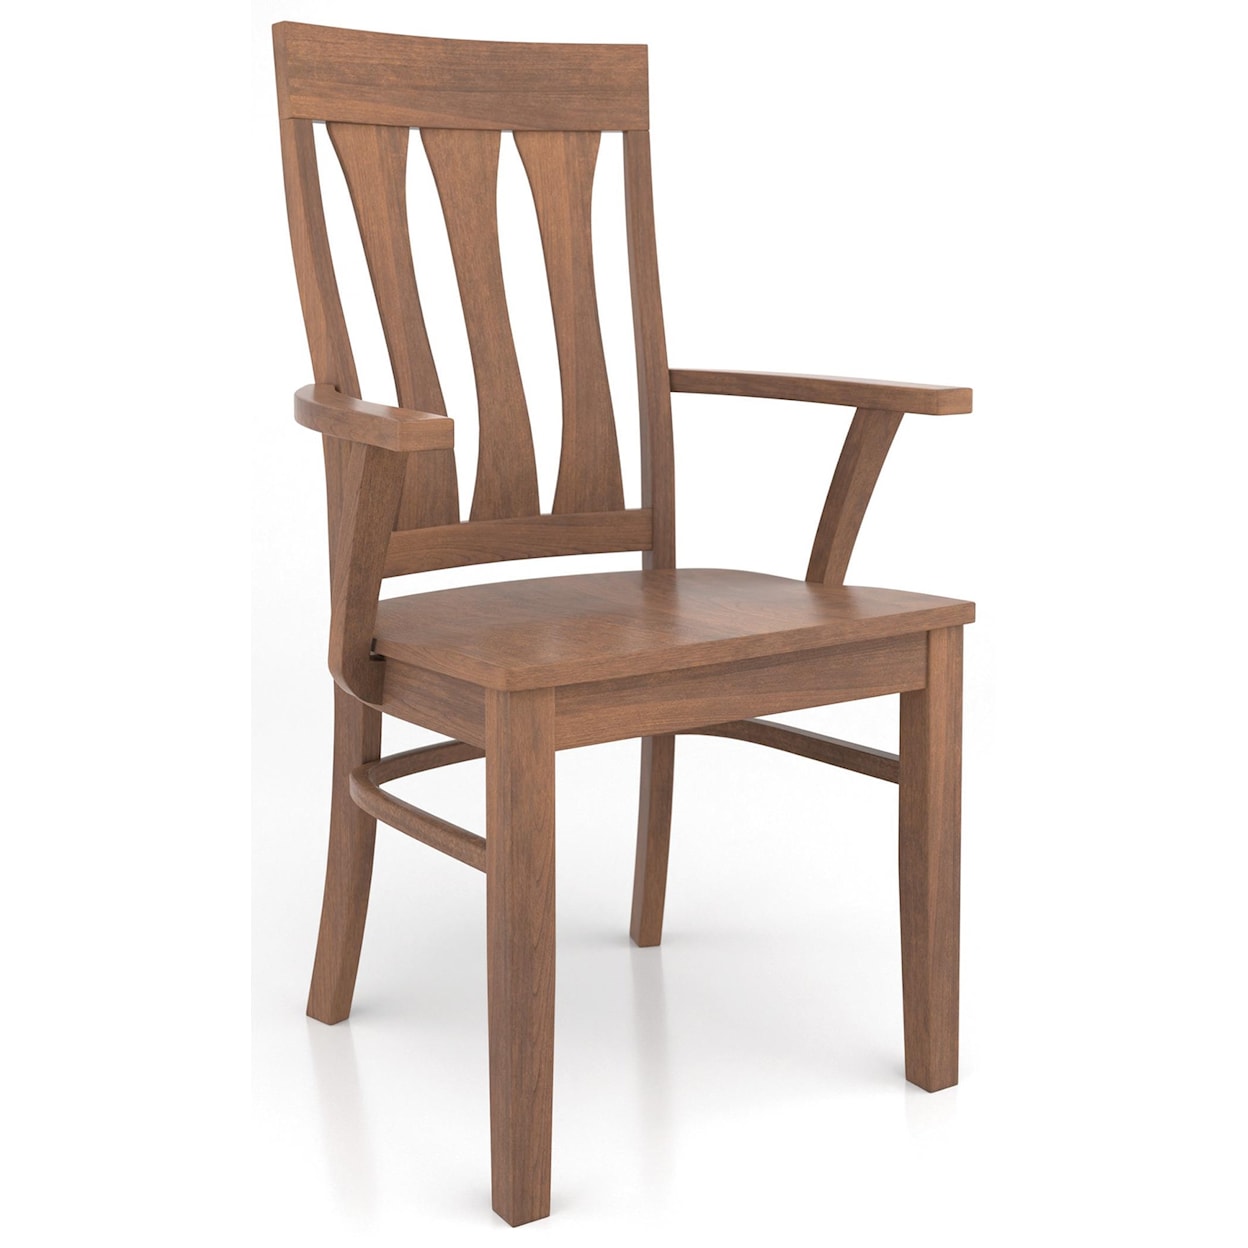 Wengerd Wood Products Kinkaid Arm Chair